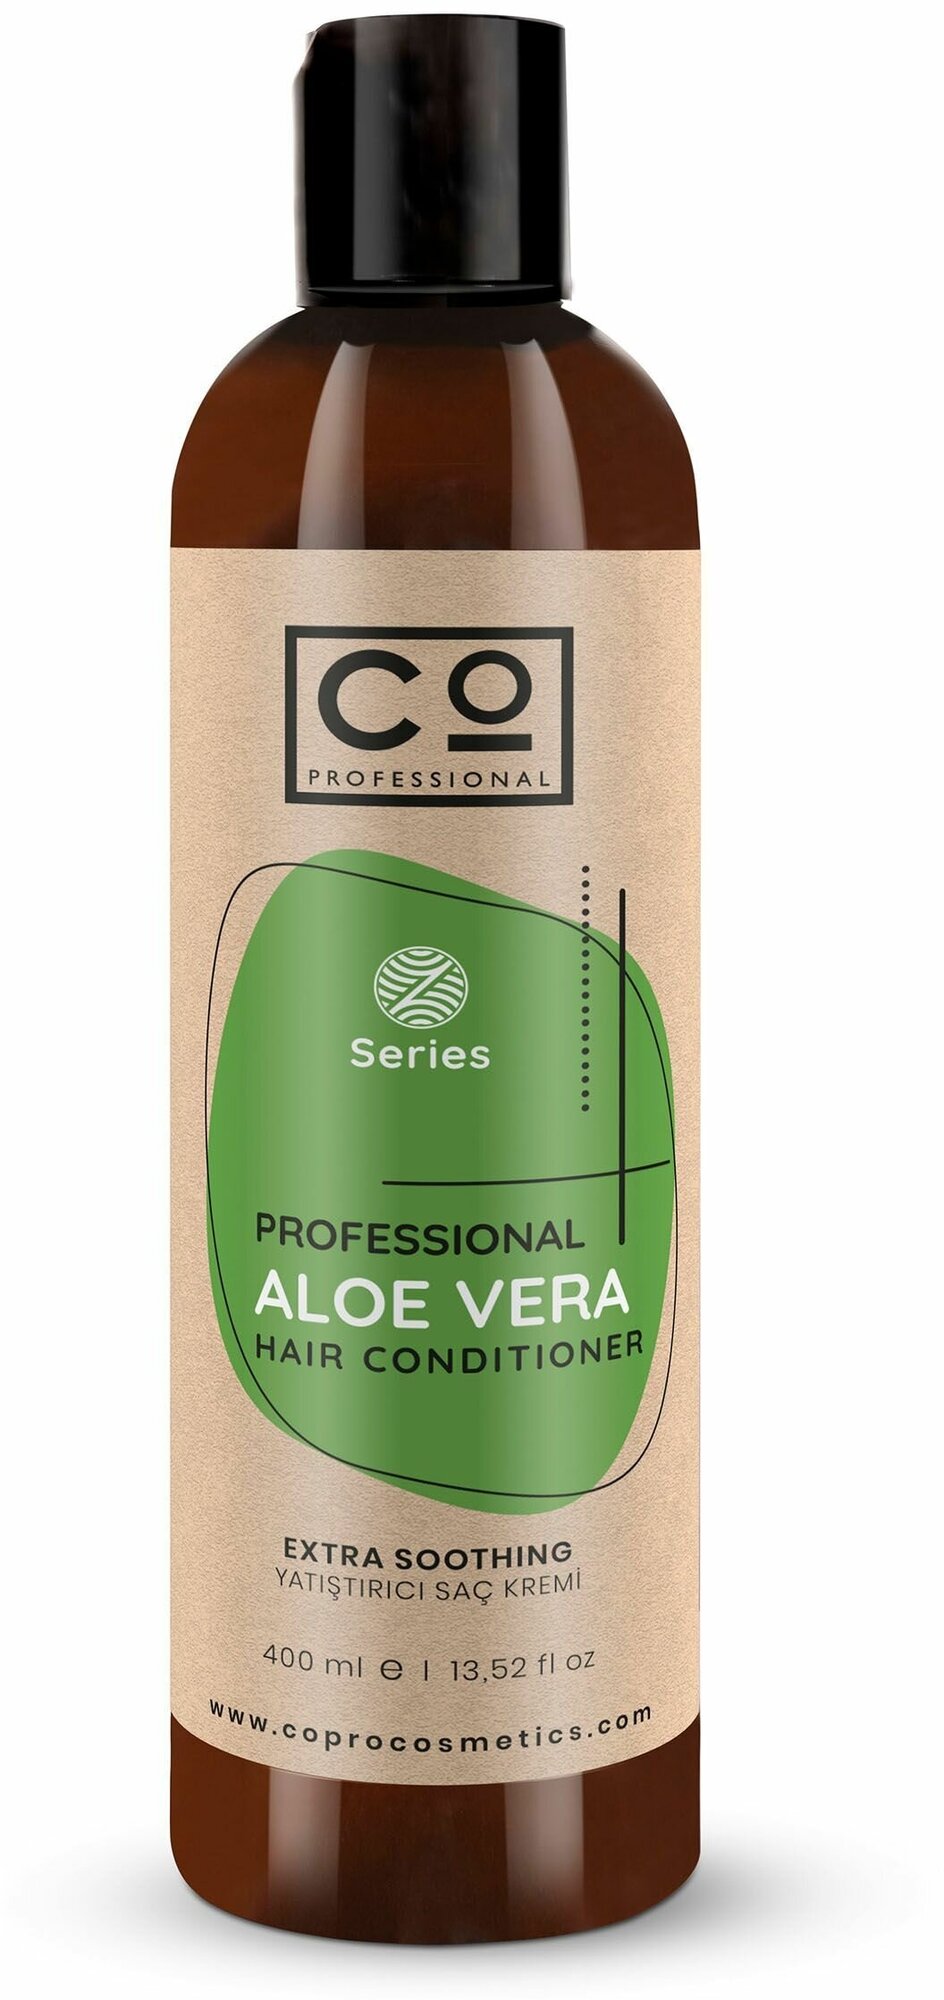 Кондиционер для волос с алоэ вера CO PROFESSIONAL Aloe Vera Hair Conditioner, 400 мл